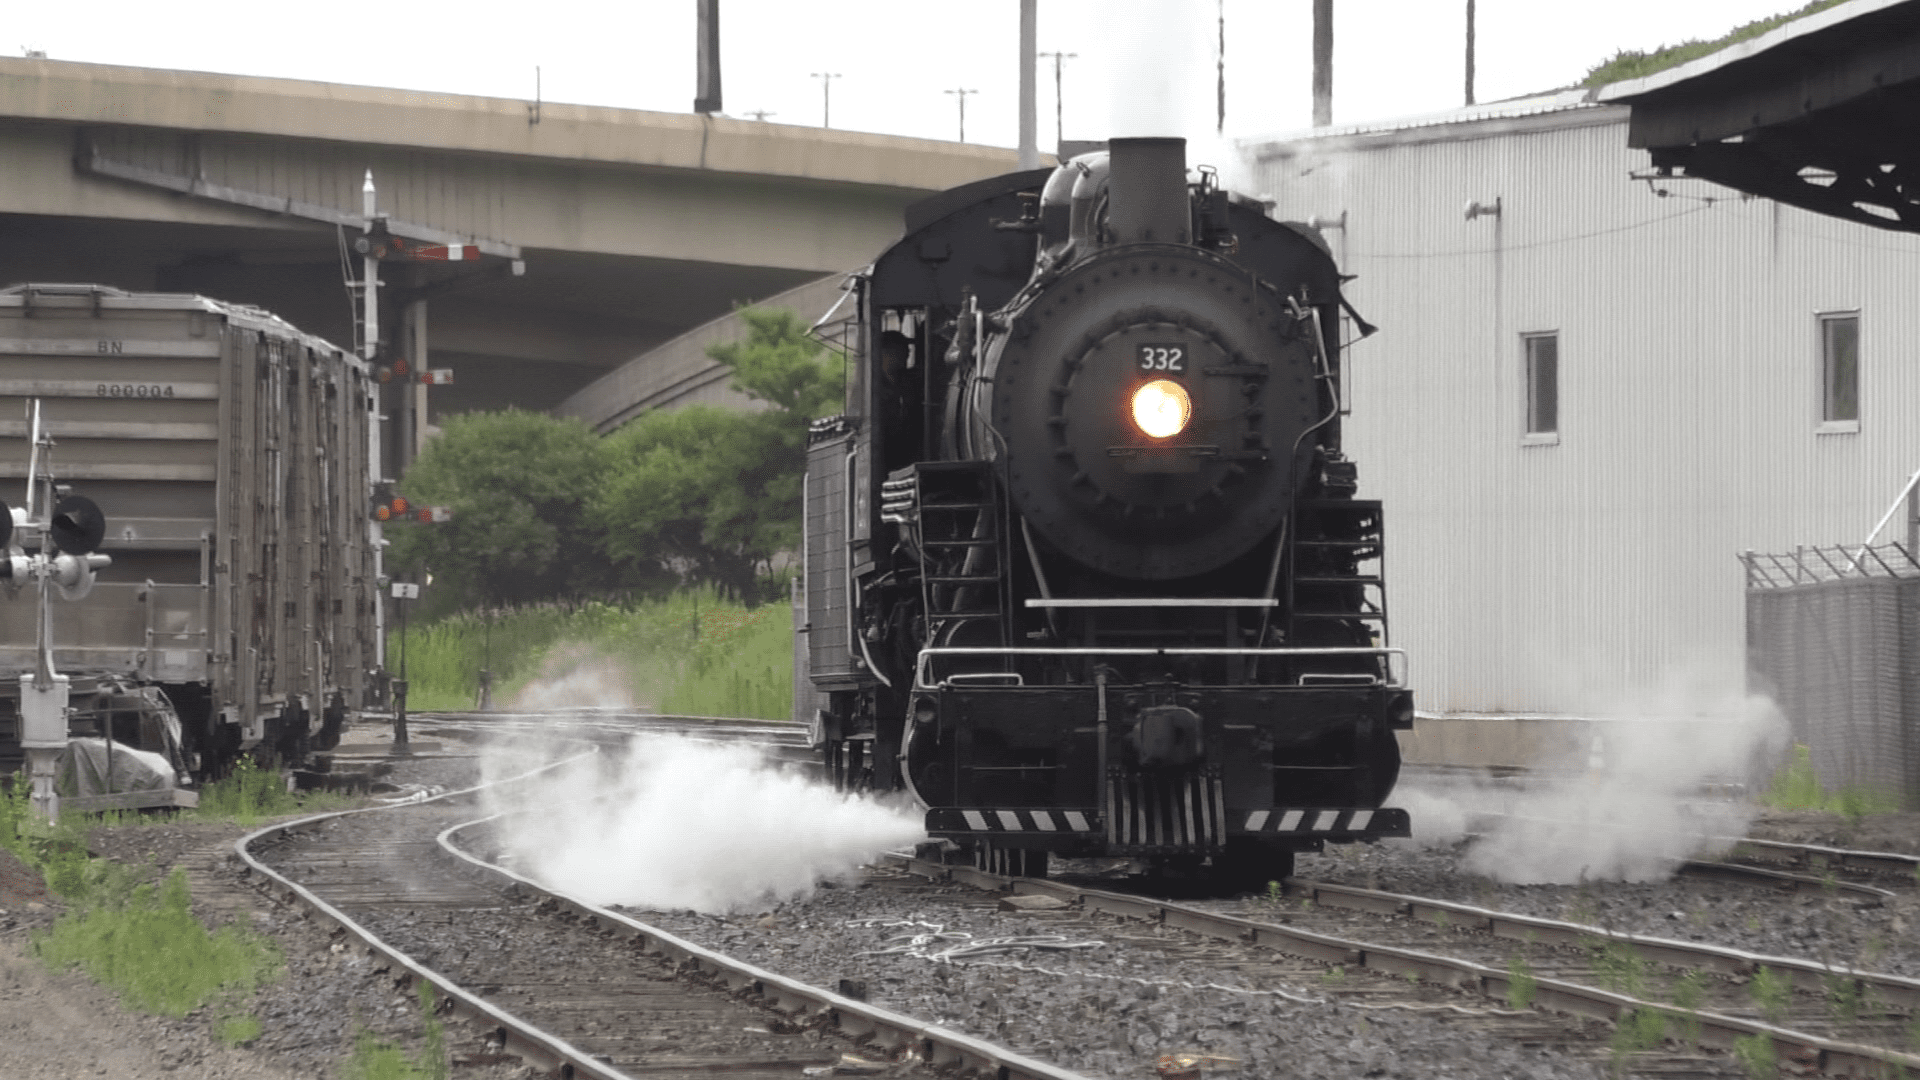 A steam locomotive on the railroad tracks